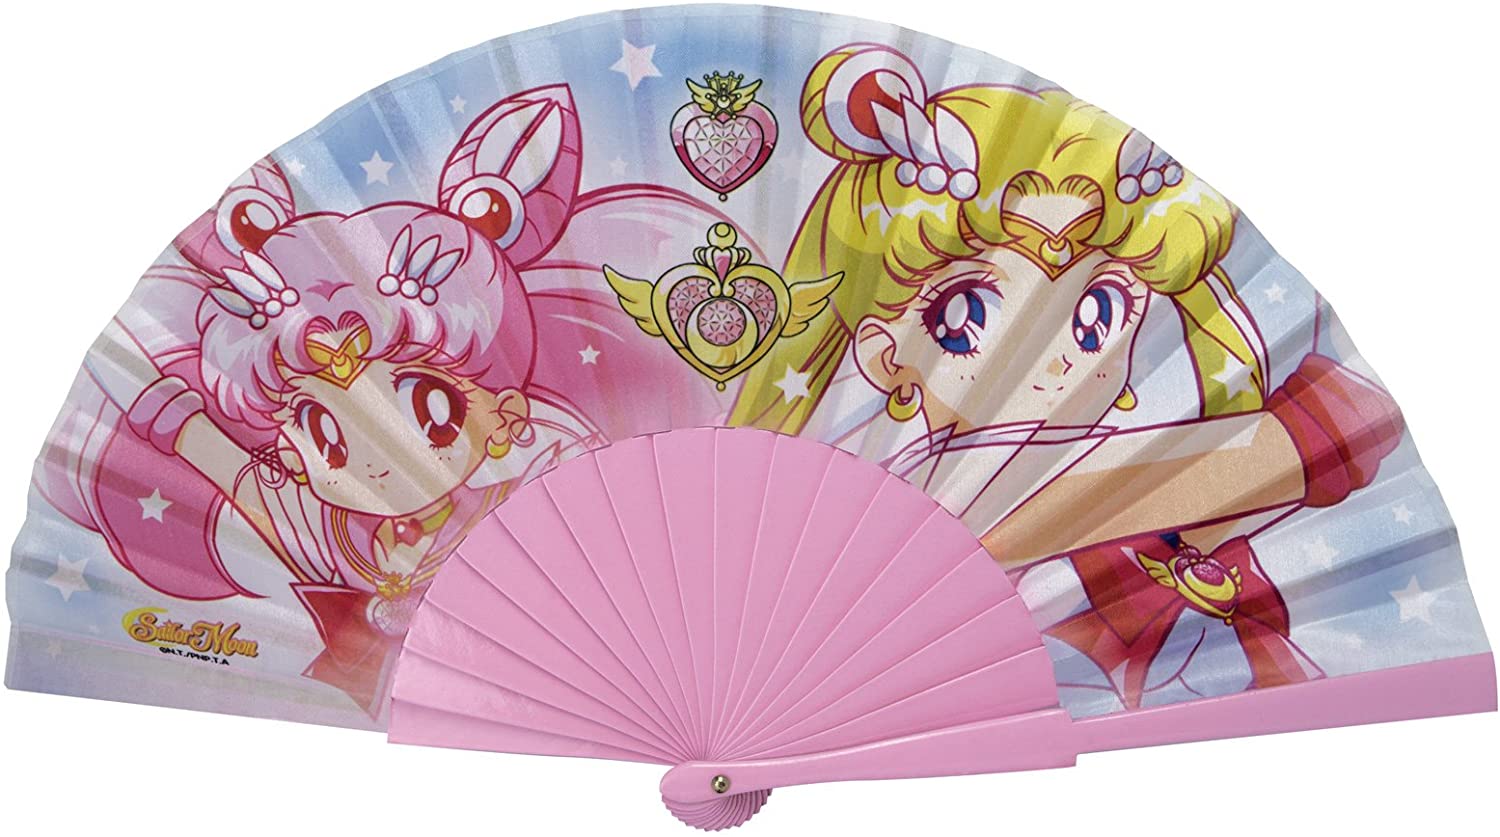 § Sailor Moon - Eventail Sailor Moon et Chibi Moon